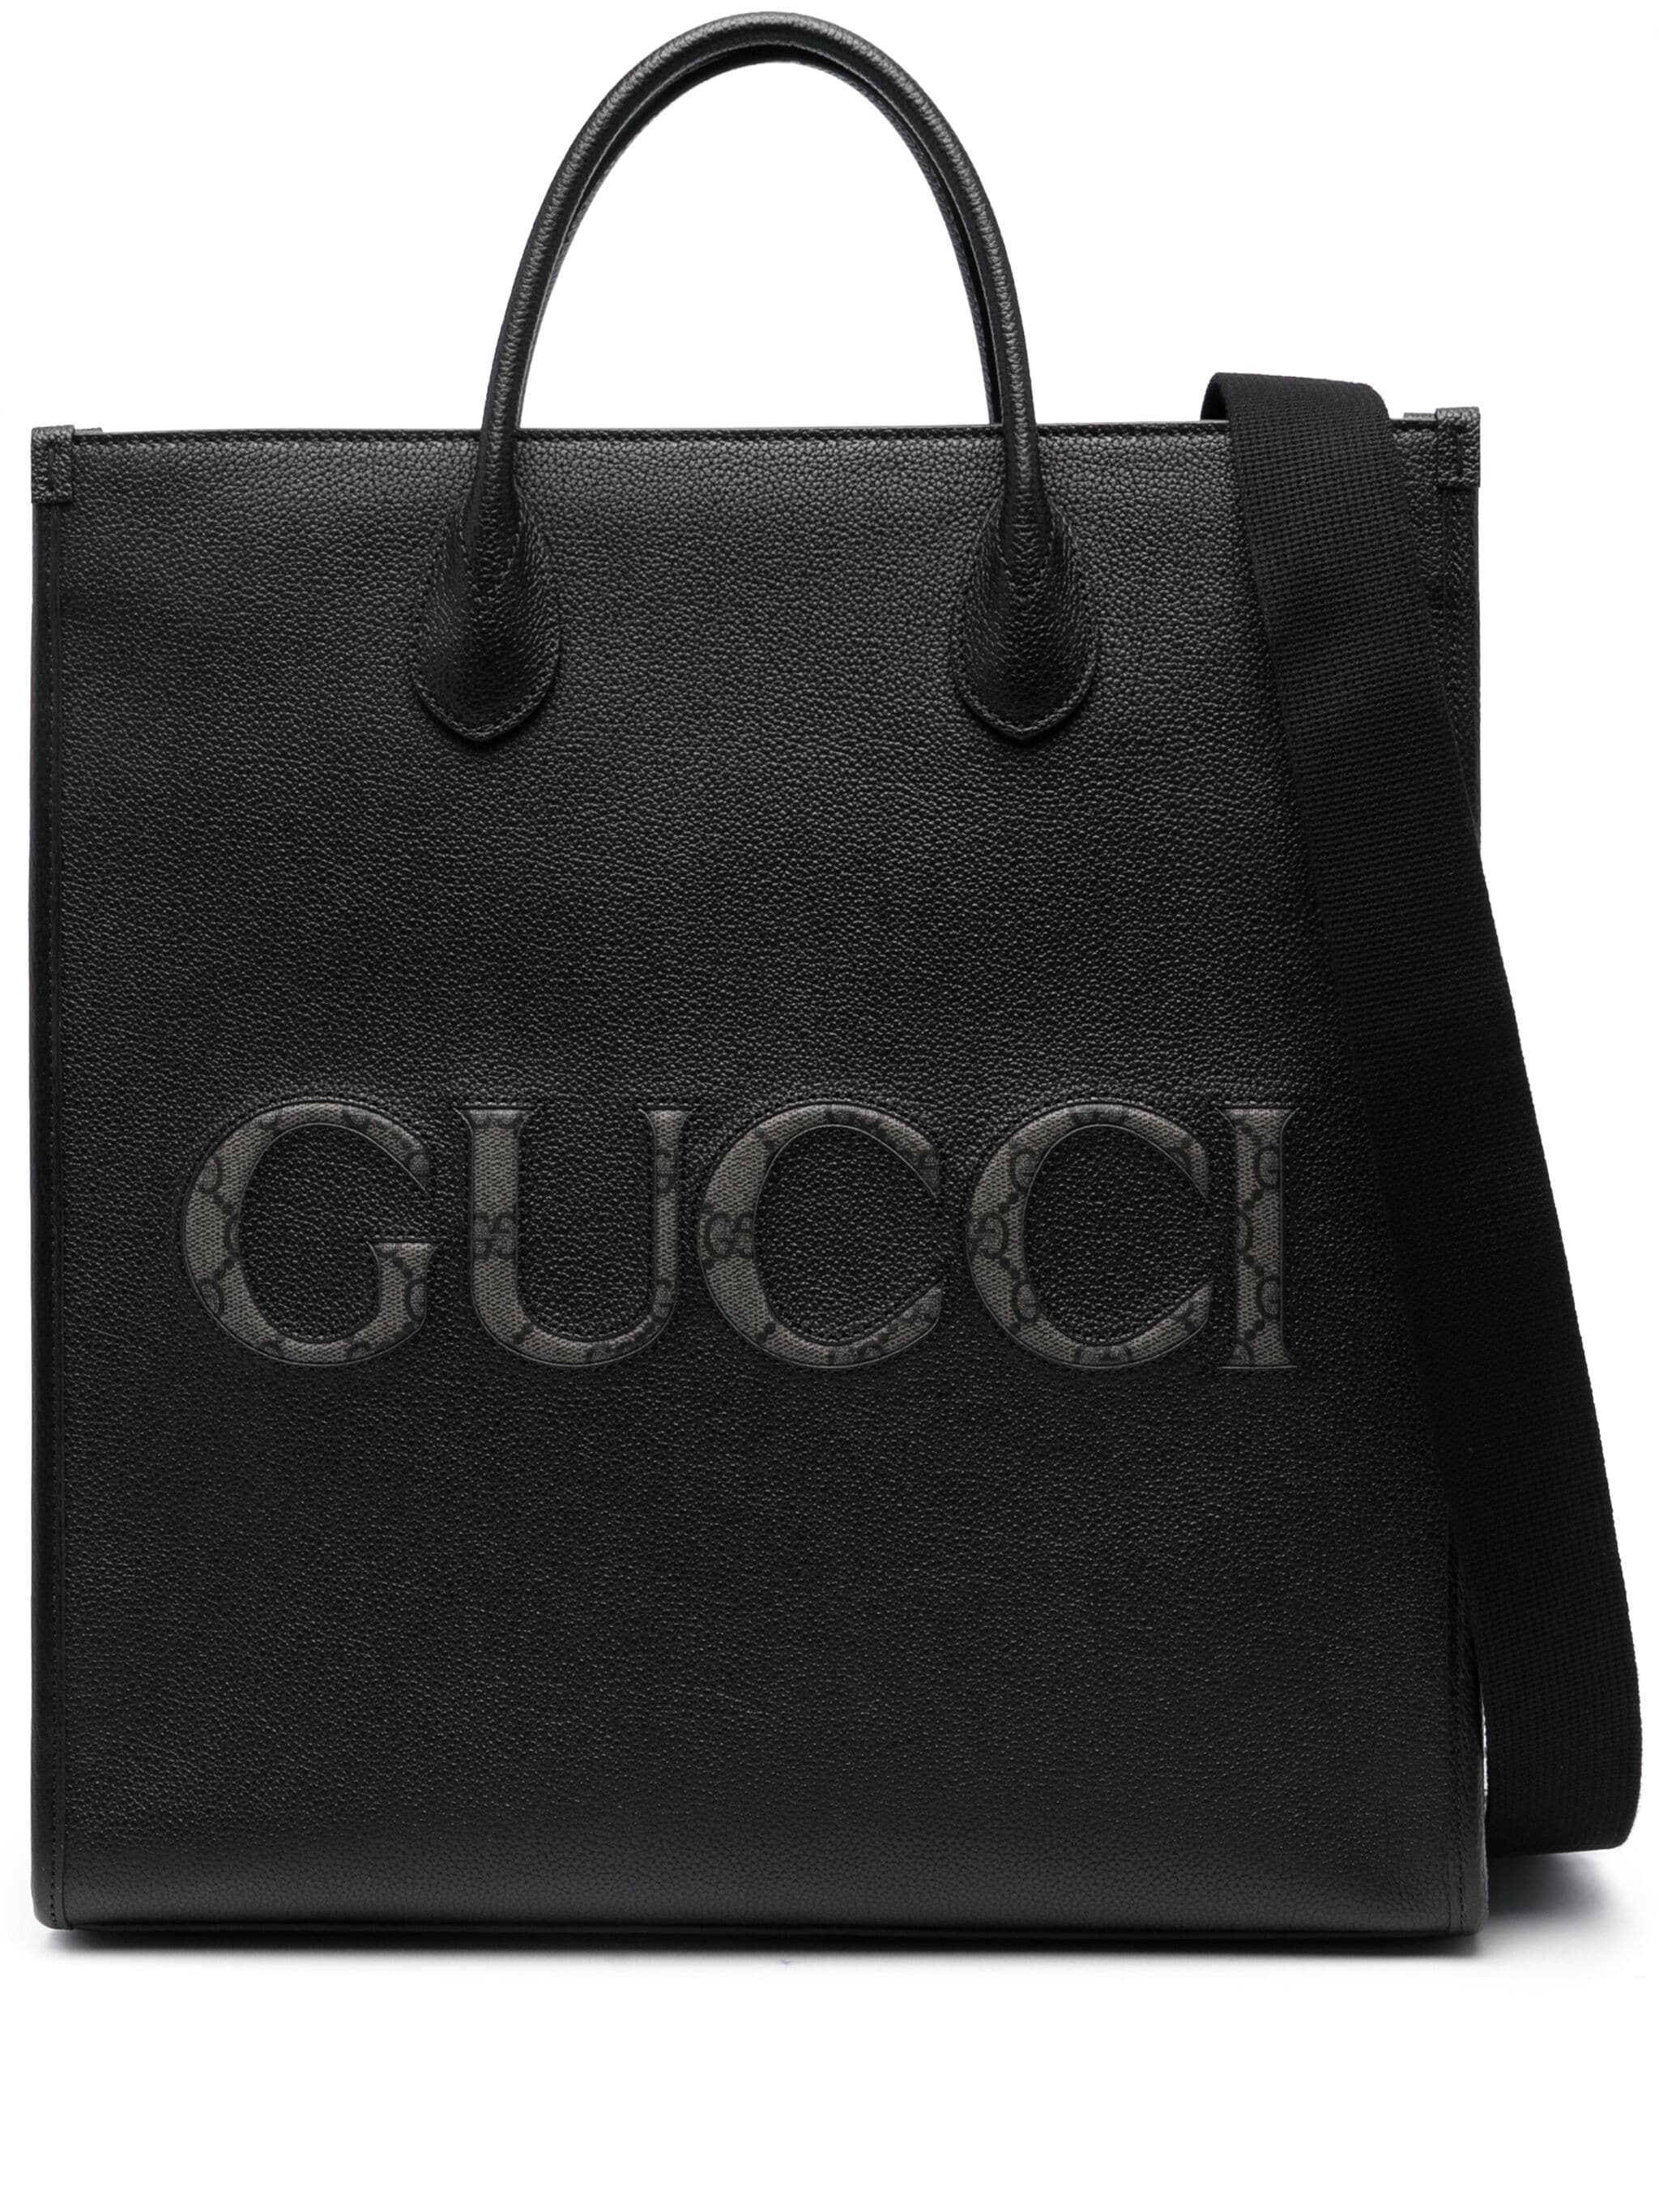 Medium Gucci shopper